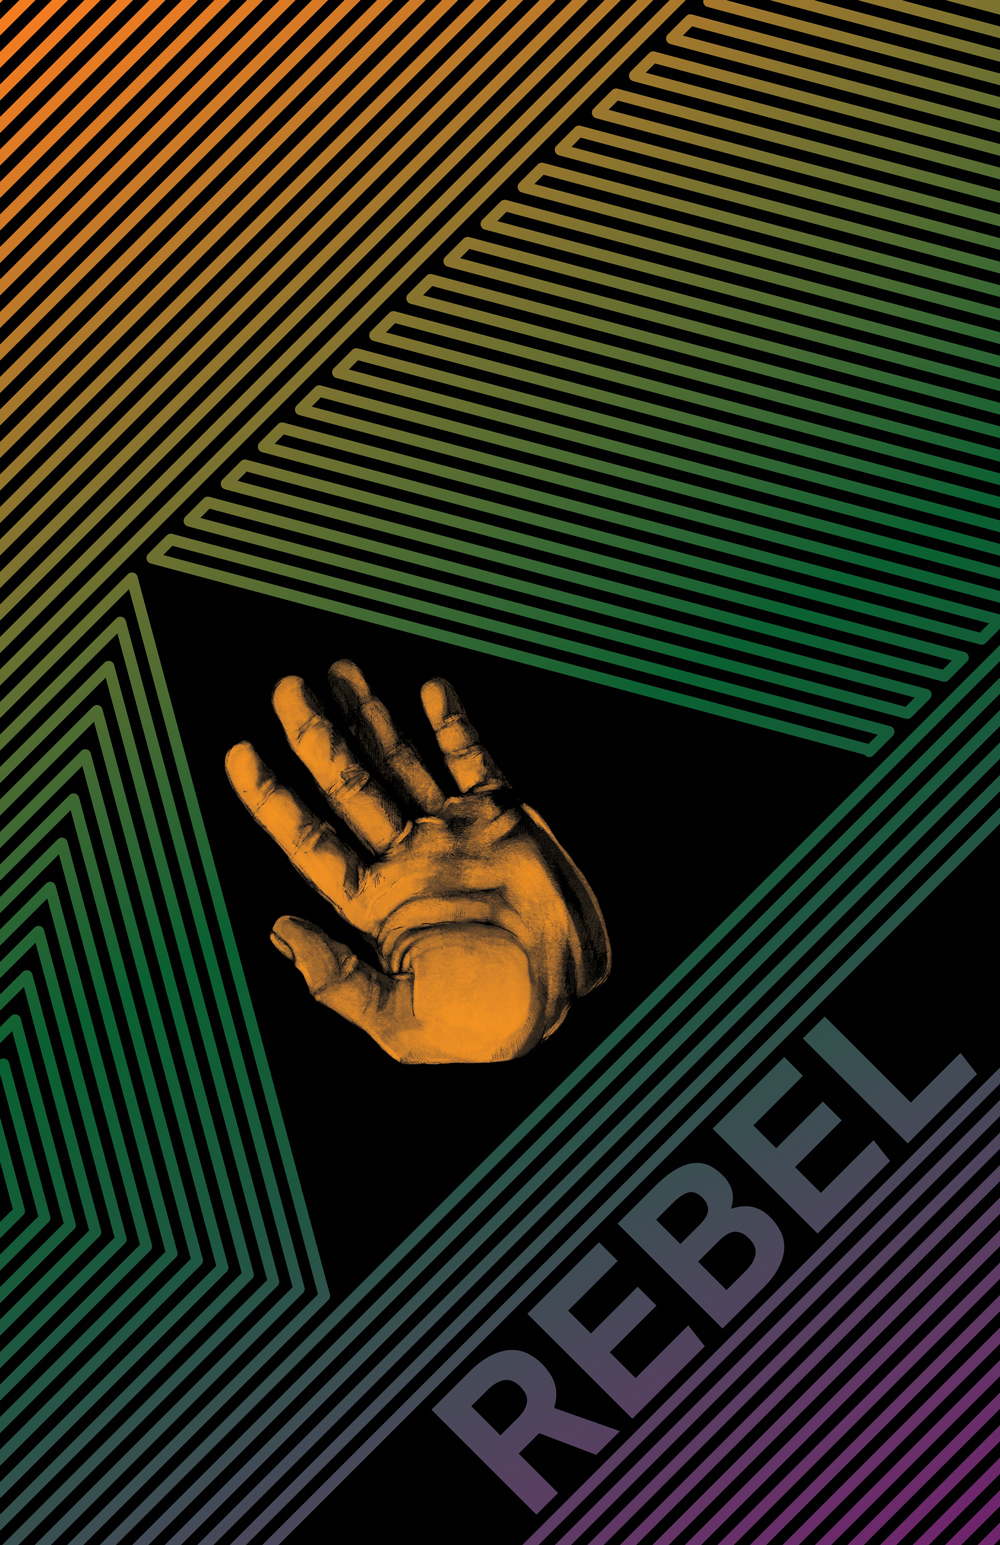 poster mixedmedia geometric gradient rebel hand pencil digital